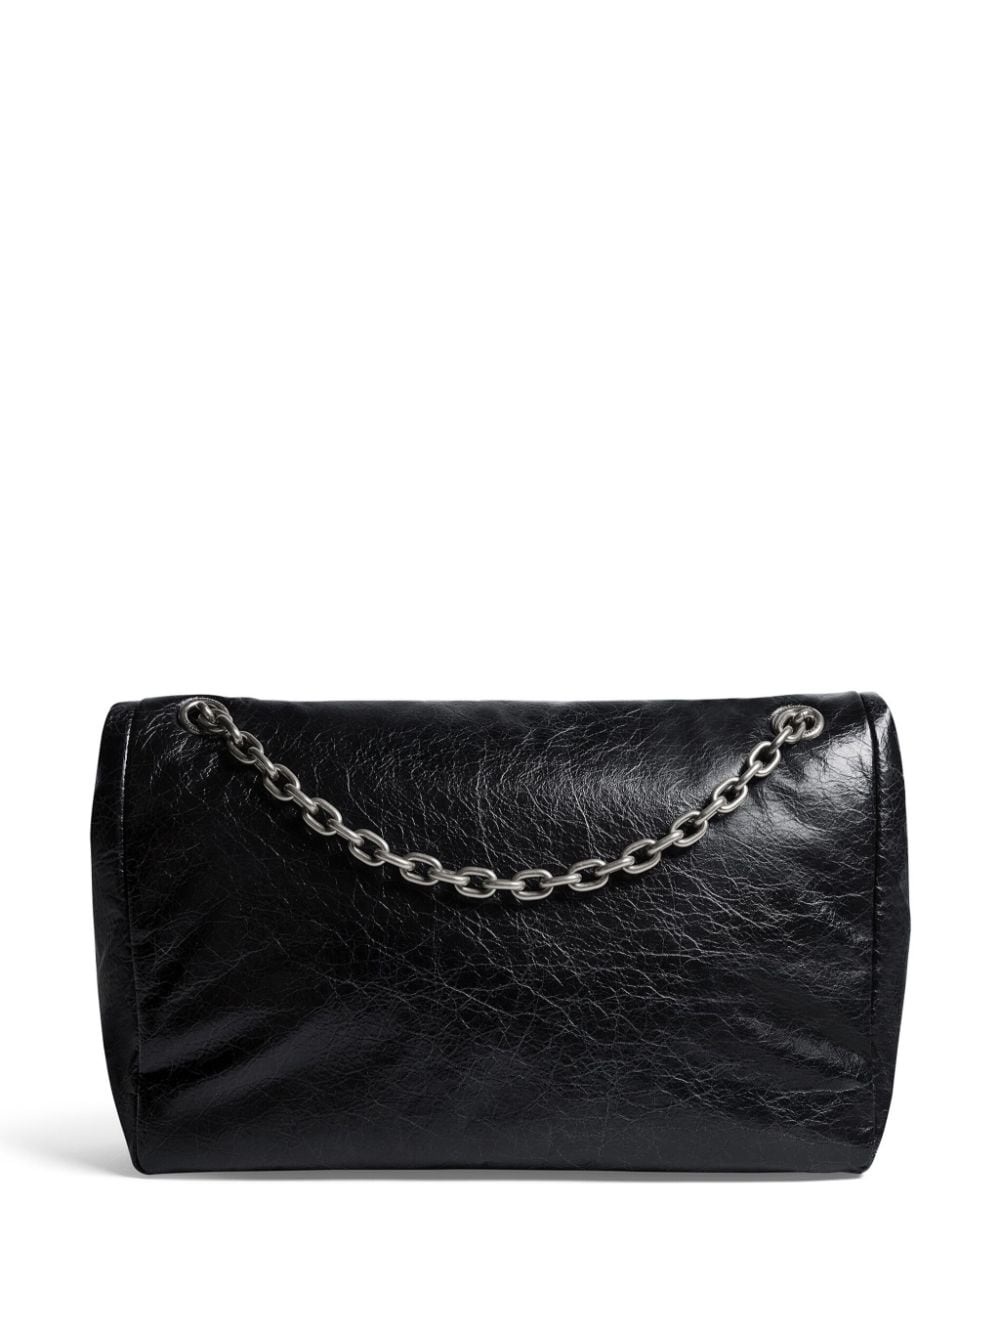 medium Monaco leather shoulder bag - 2